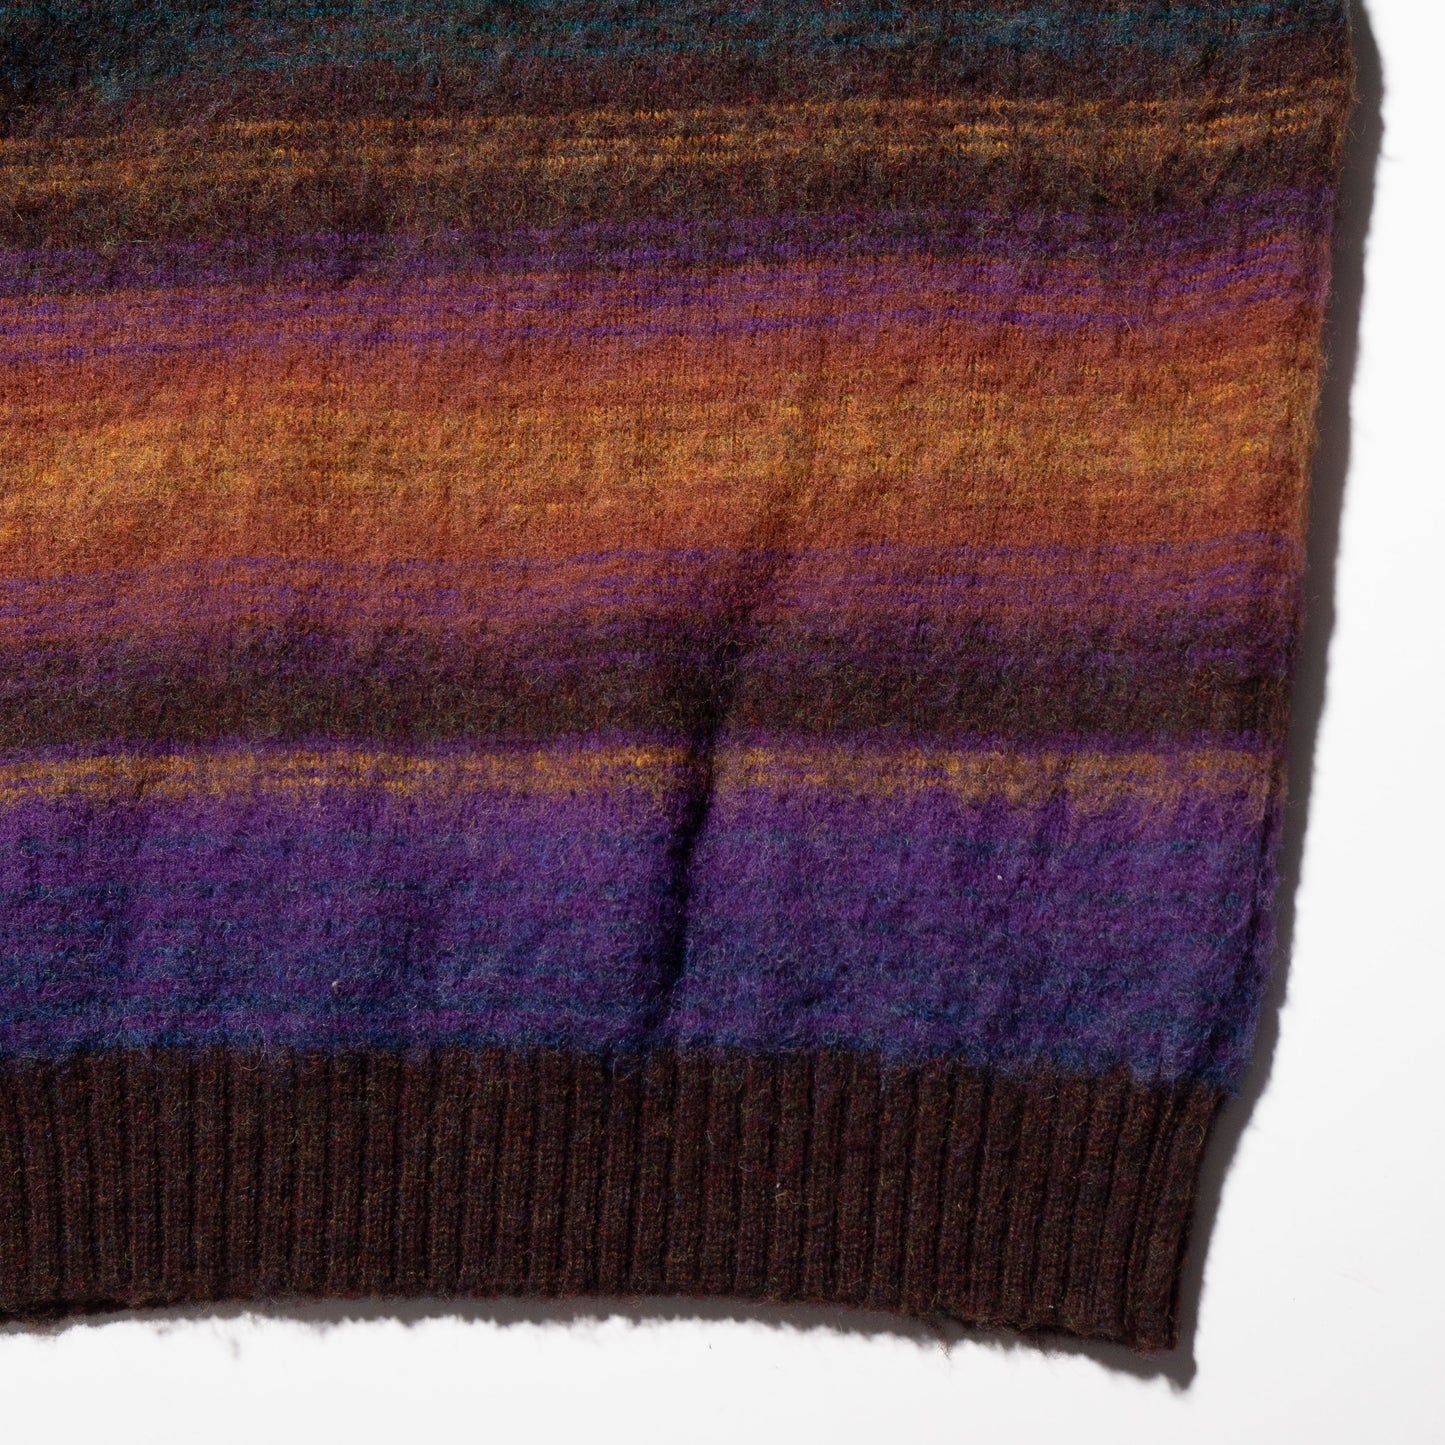 vintage woolrich loose border sweater